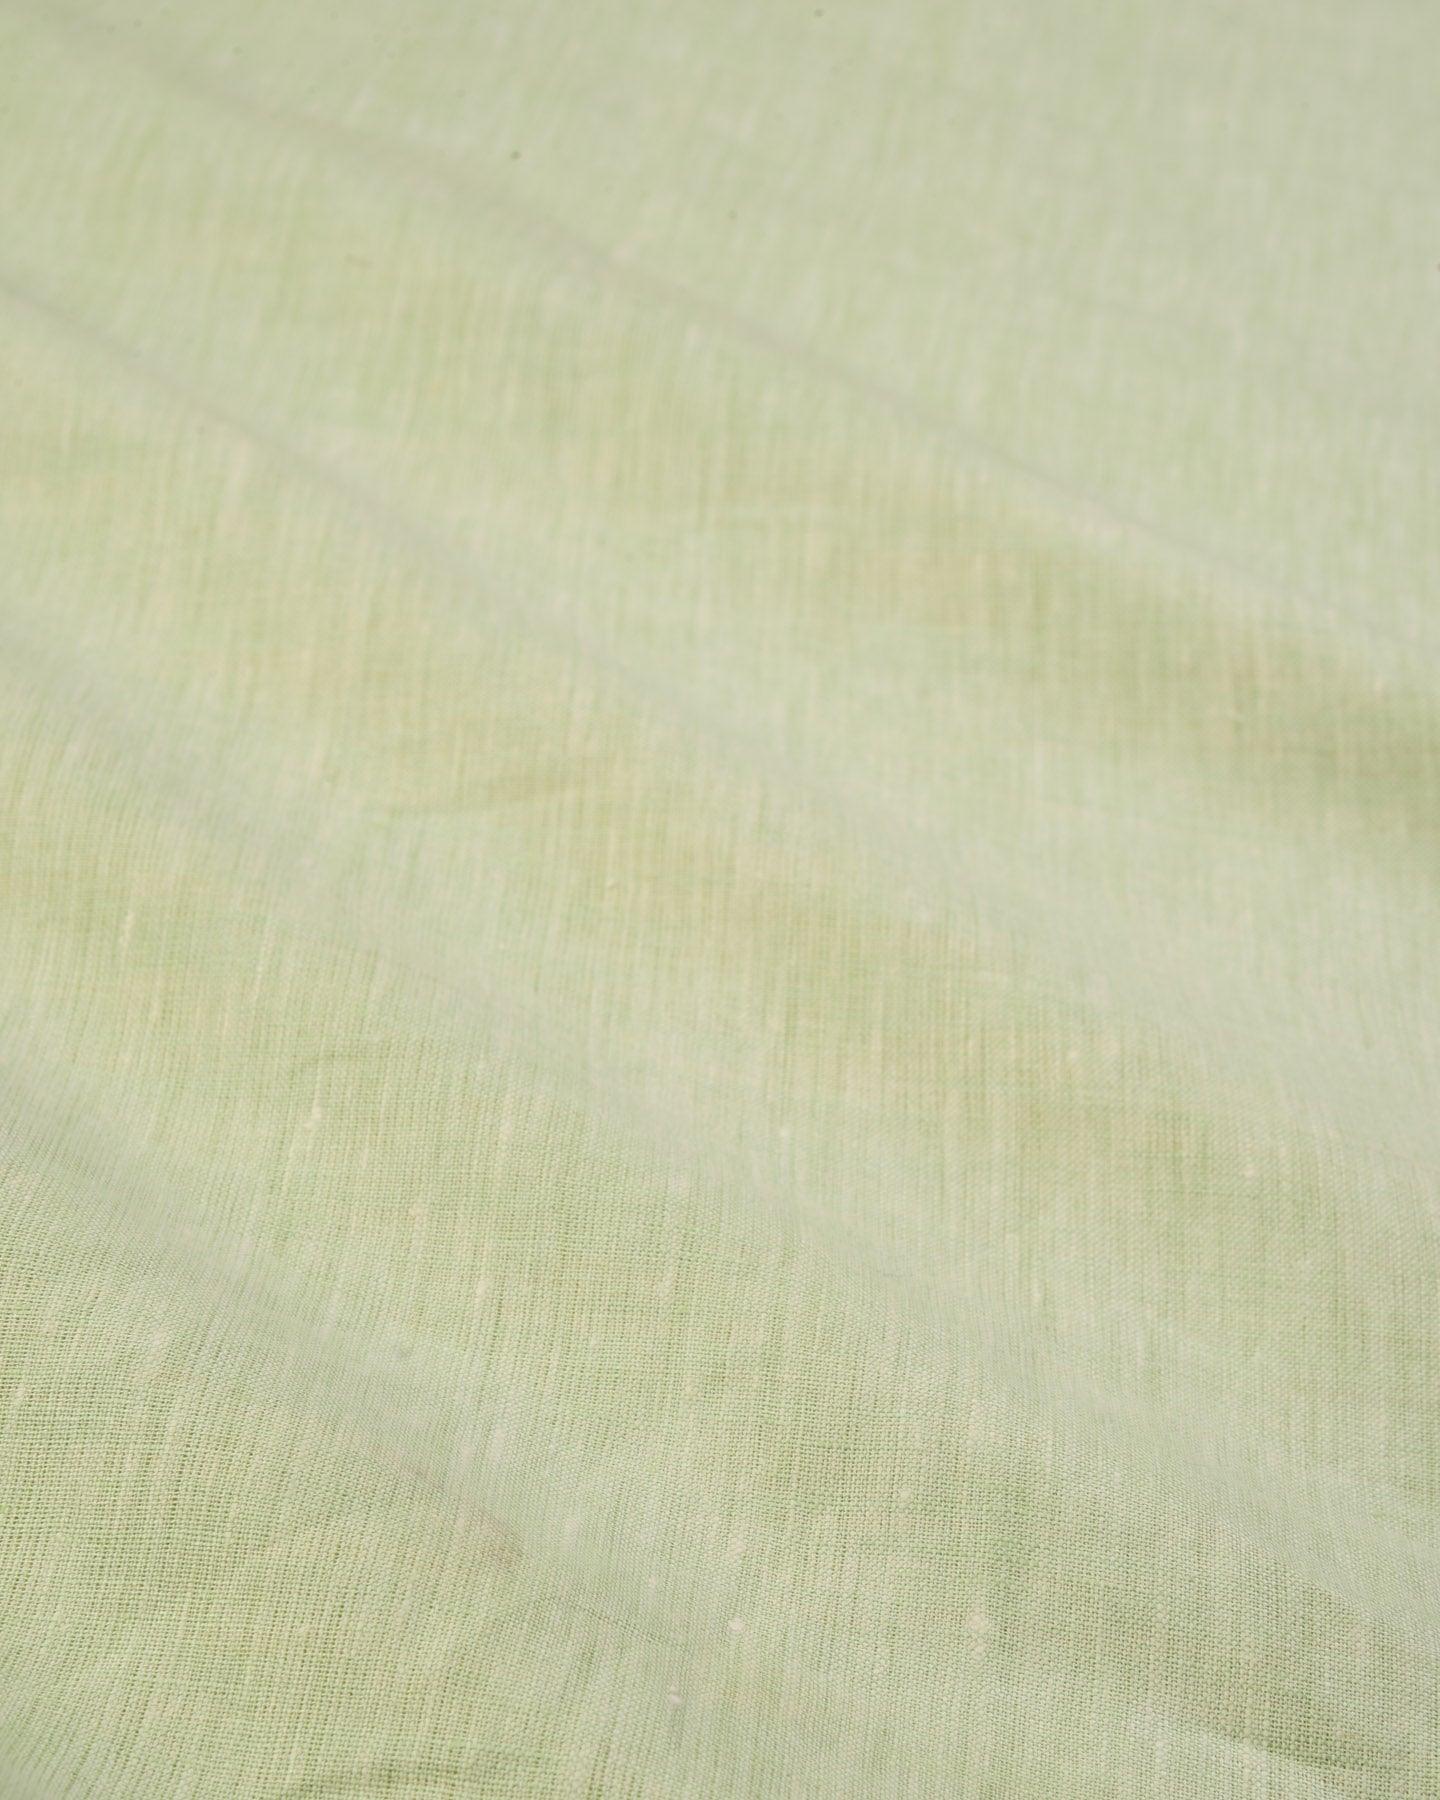 Celadon Green Textured Plain Woven Cotton Linen Fabric - By HolyWeaves, Benares